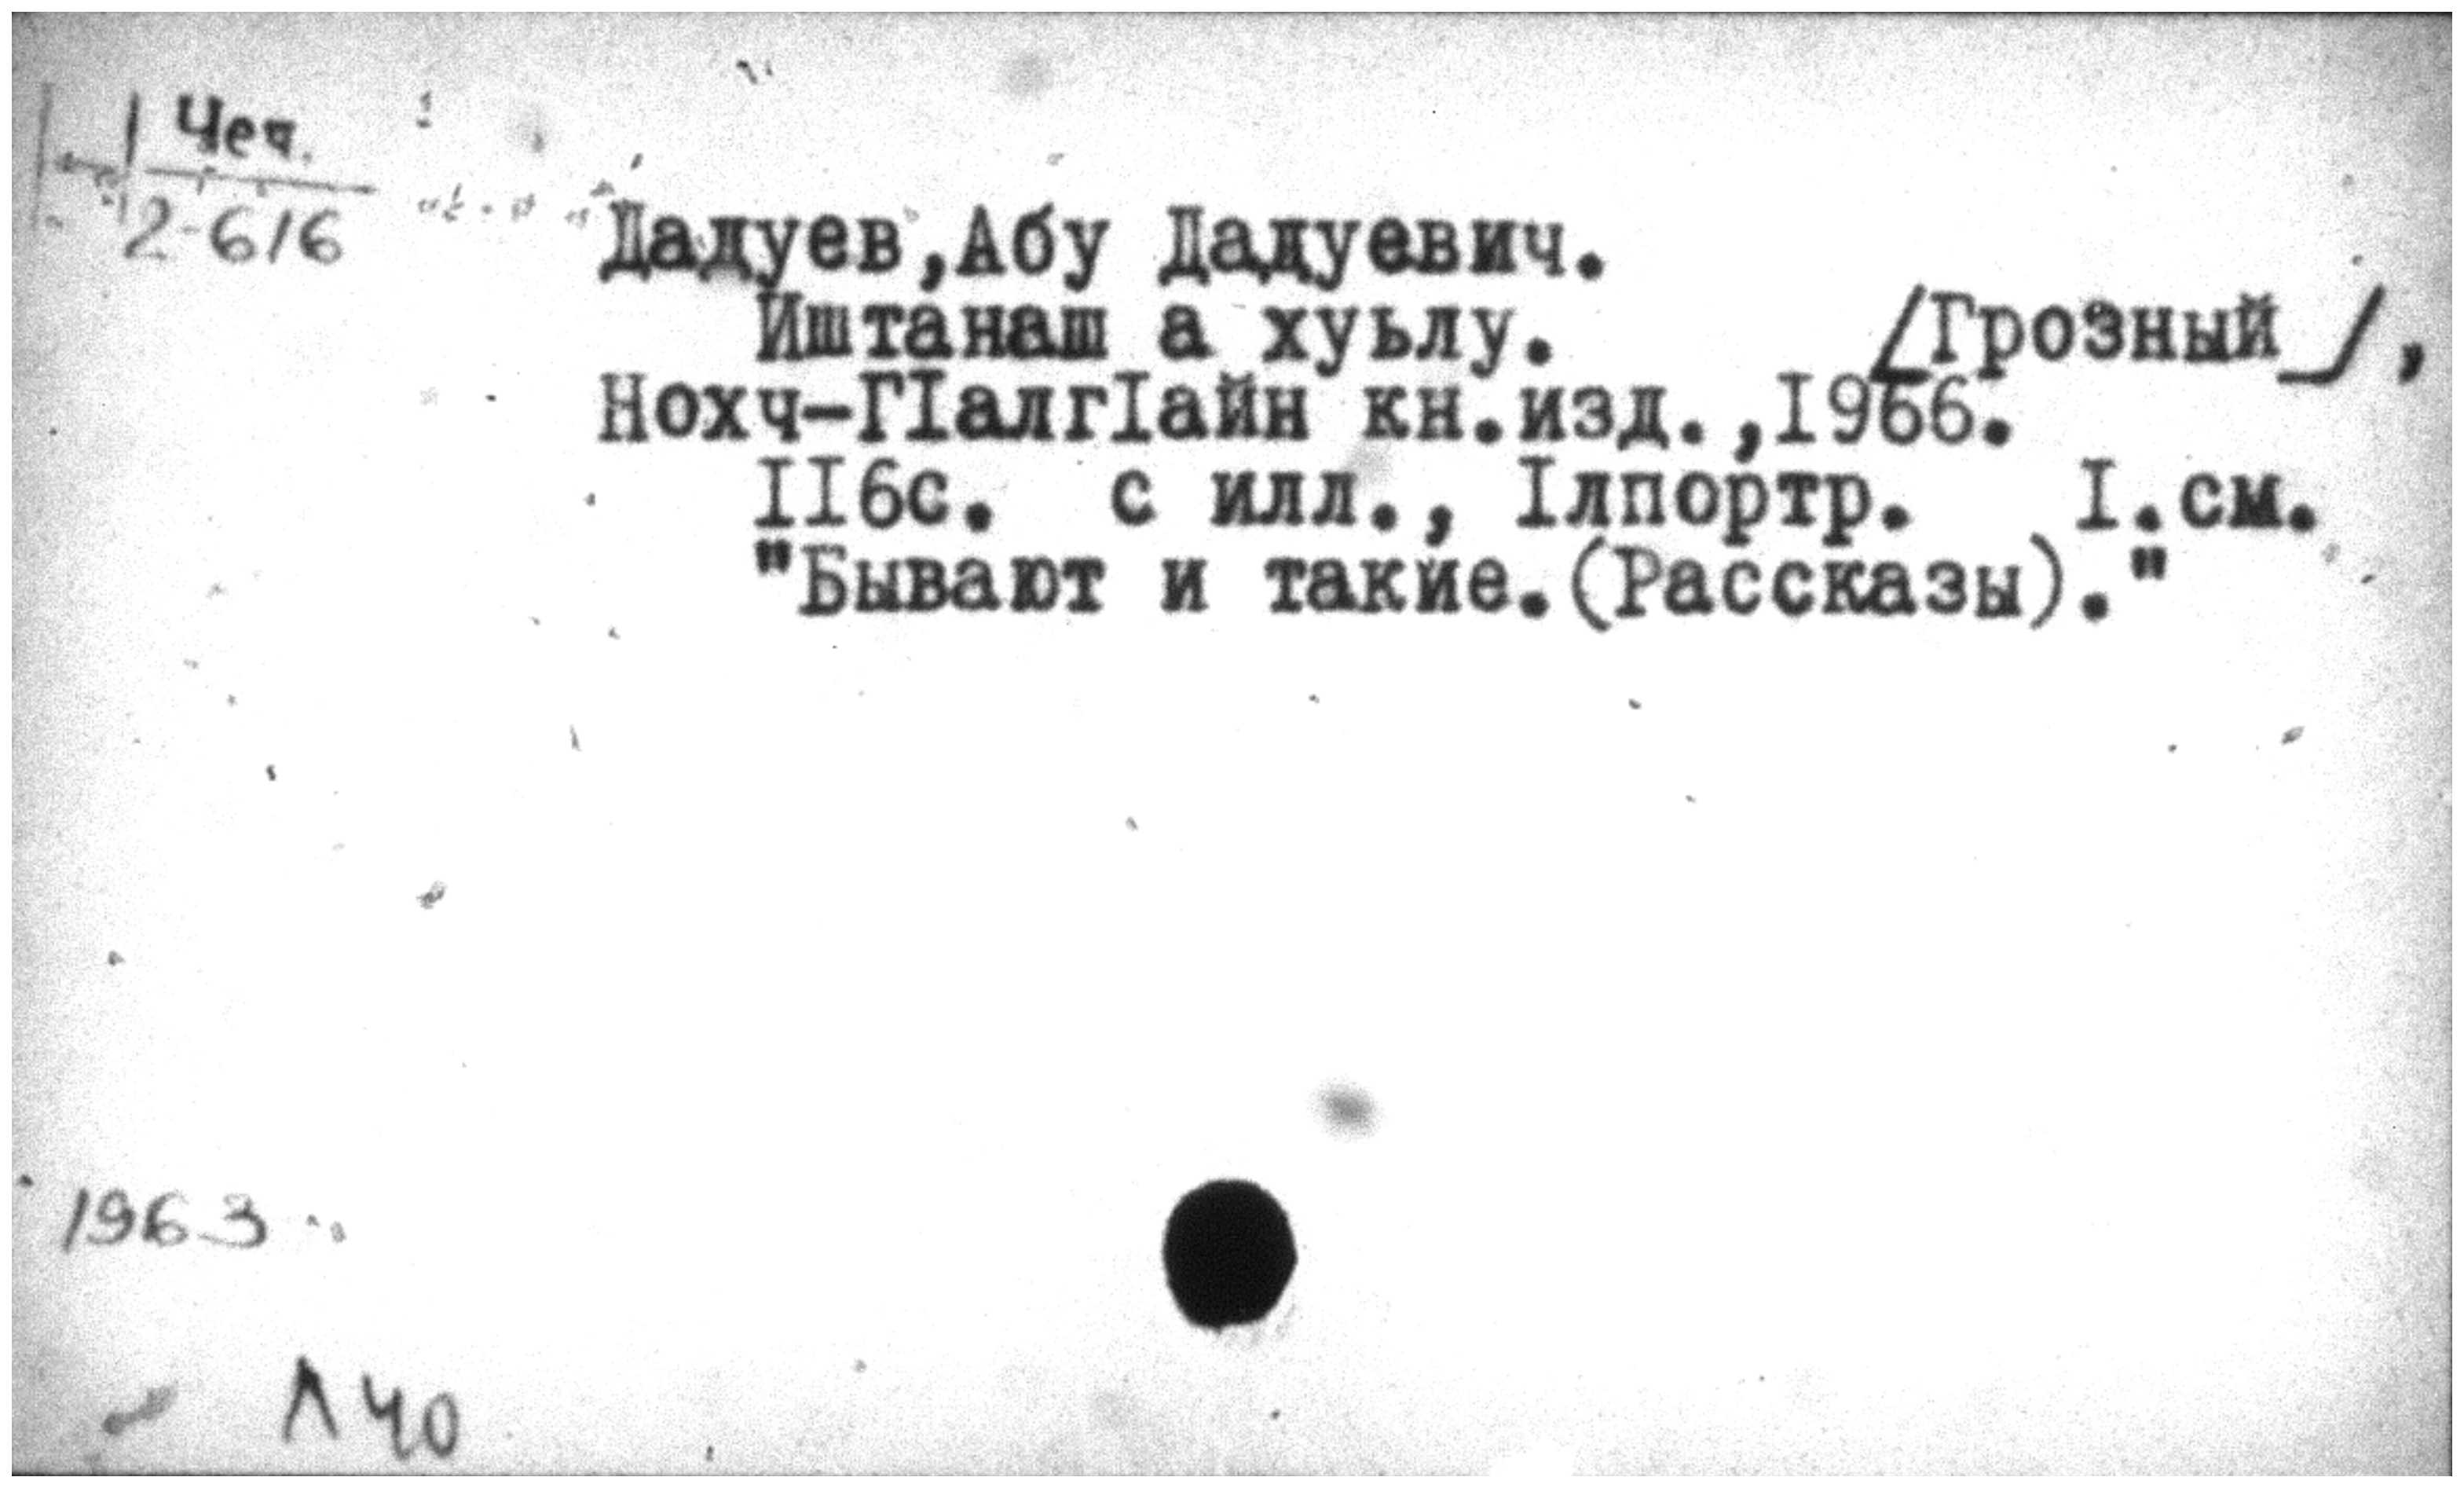 Microfiche imprint catalog for Chechen language